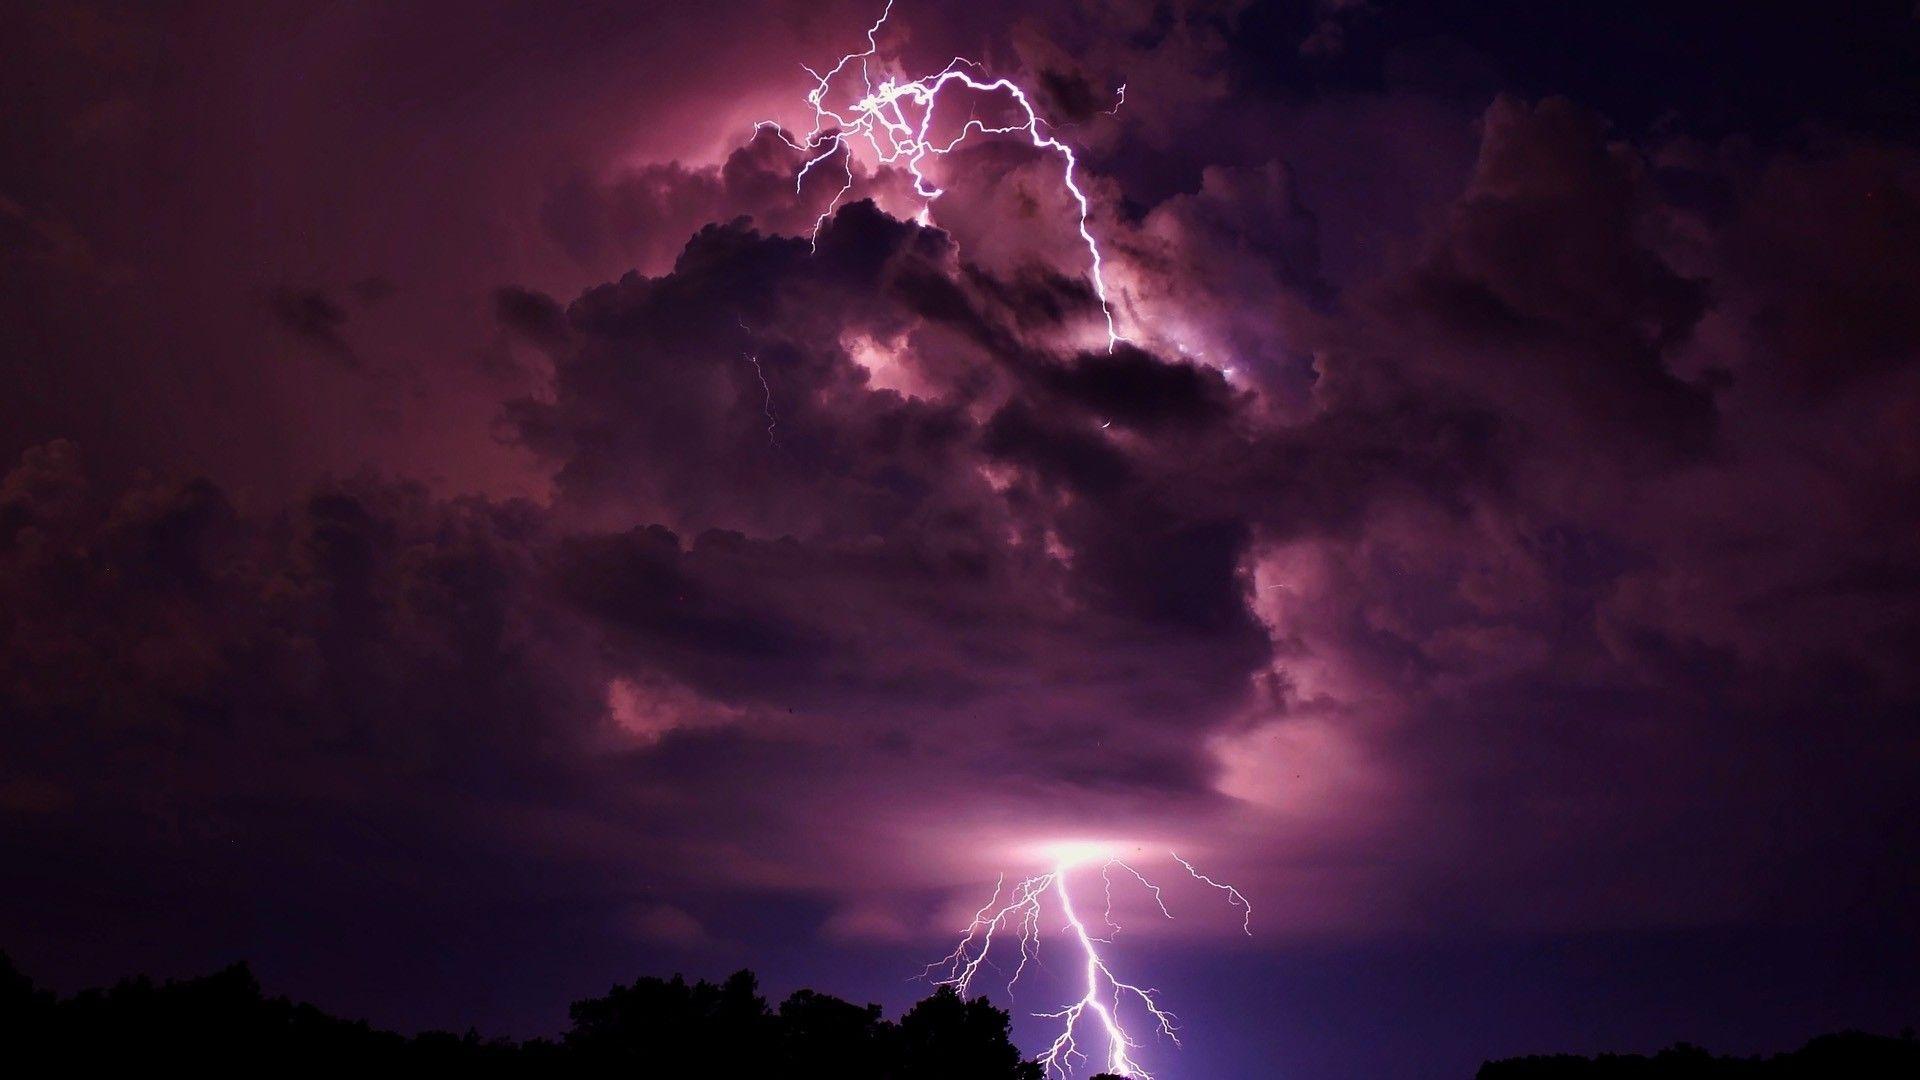 Wallpaper.wiki Lightning Storm Thunder Cloud Image PIC WPD001965